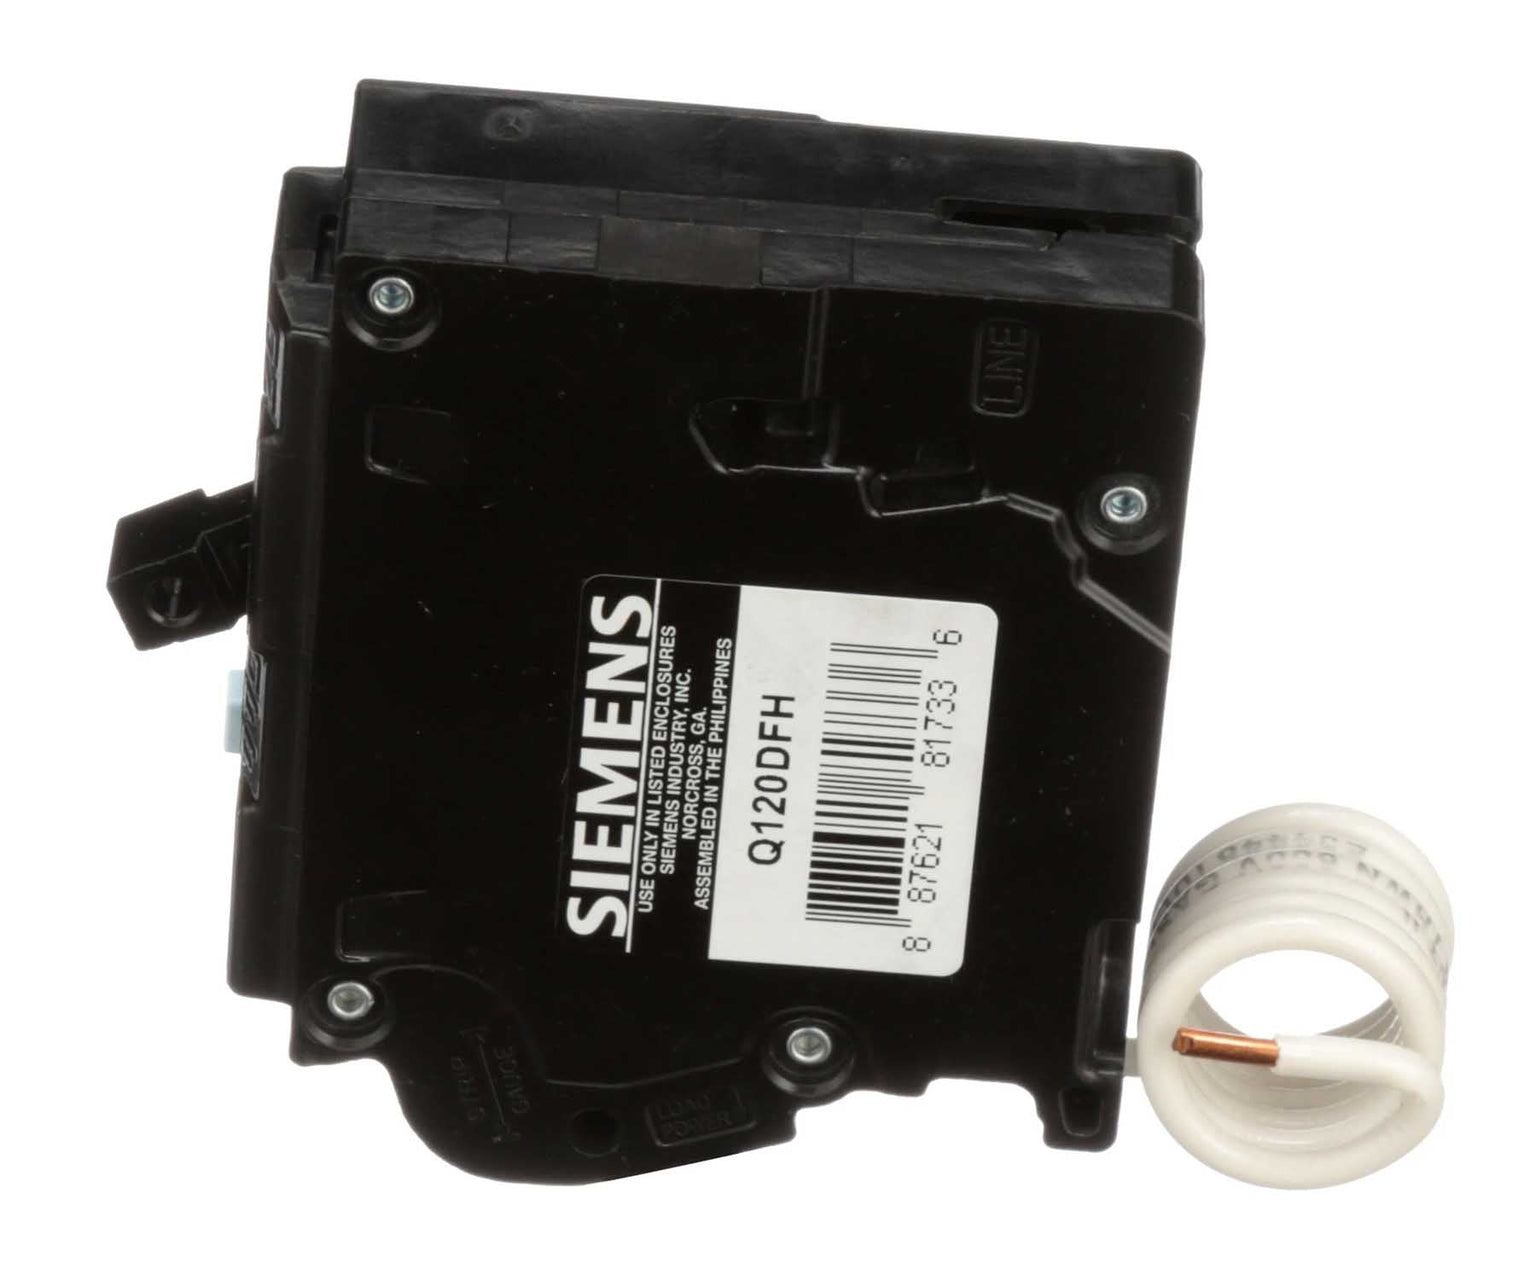 Q120DFH - Siemens - 20 Amp Molded Case Circuit Breaker